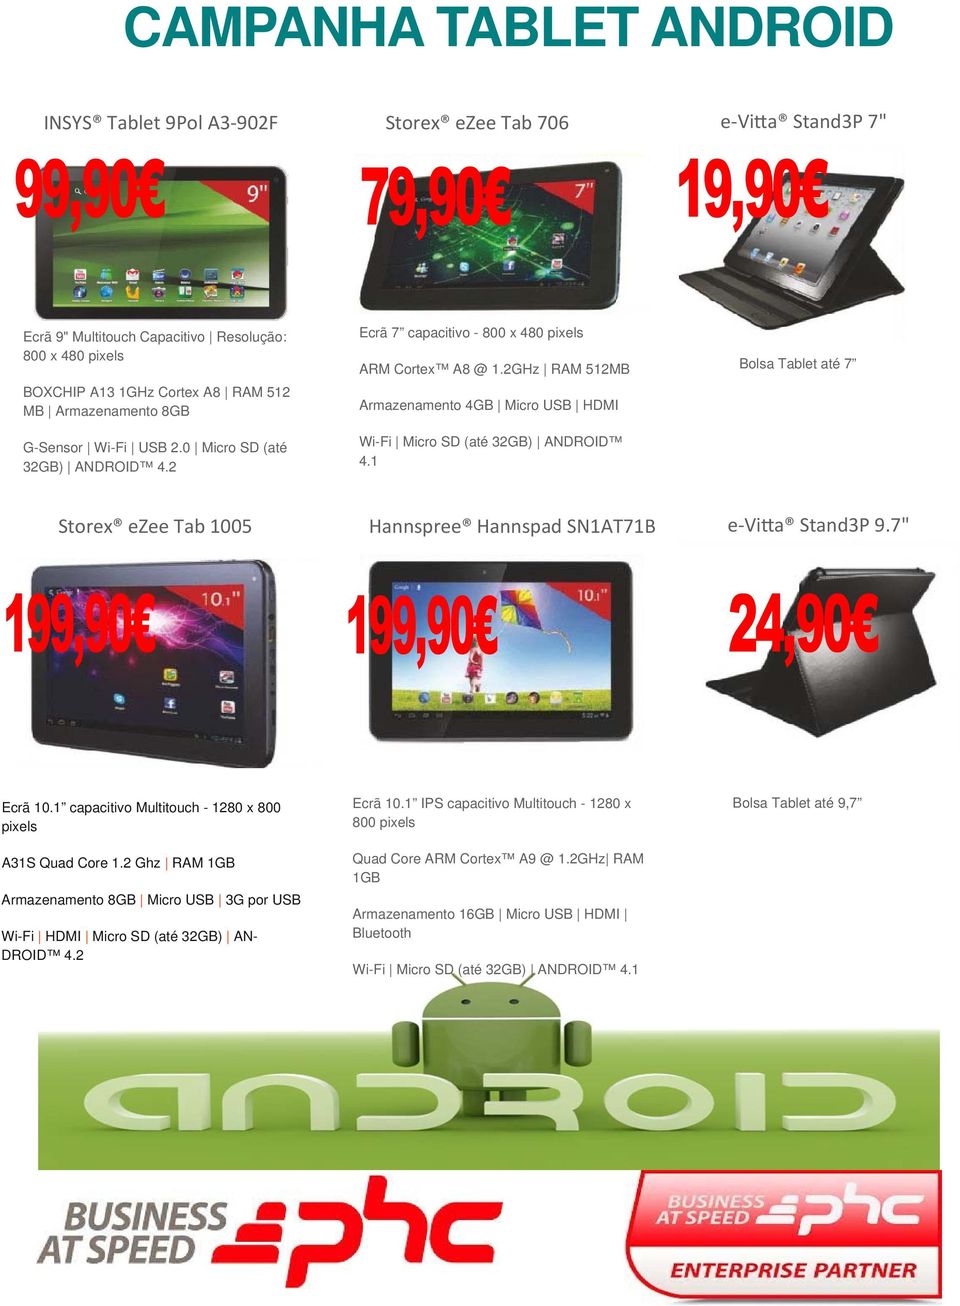 1 Bolsa Tablet até 7 Storex ezee Tab 1005 Hannspree Hannspad SN1AT71B e Vi a Stand3P 9.7" Ecrã 10.1 capacitivo Multitouch - 1280 x 800 pixels A31S Quad Core 1.